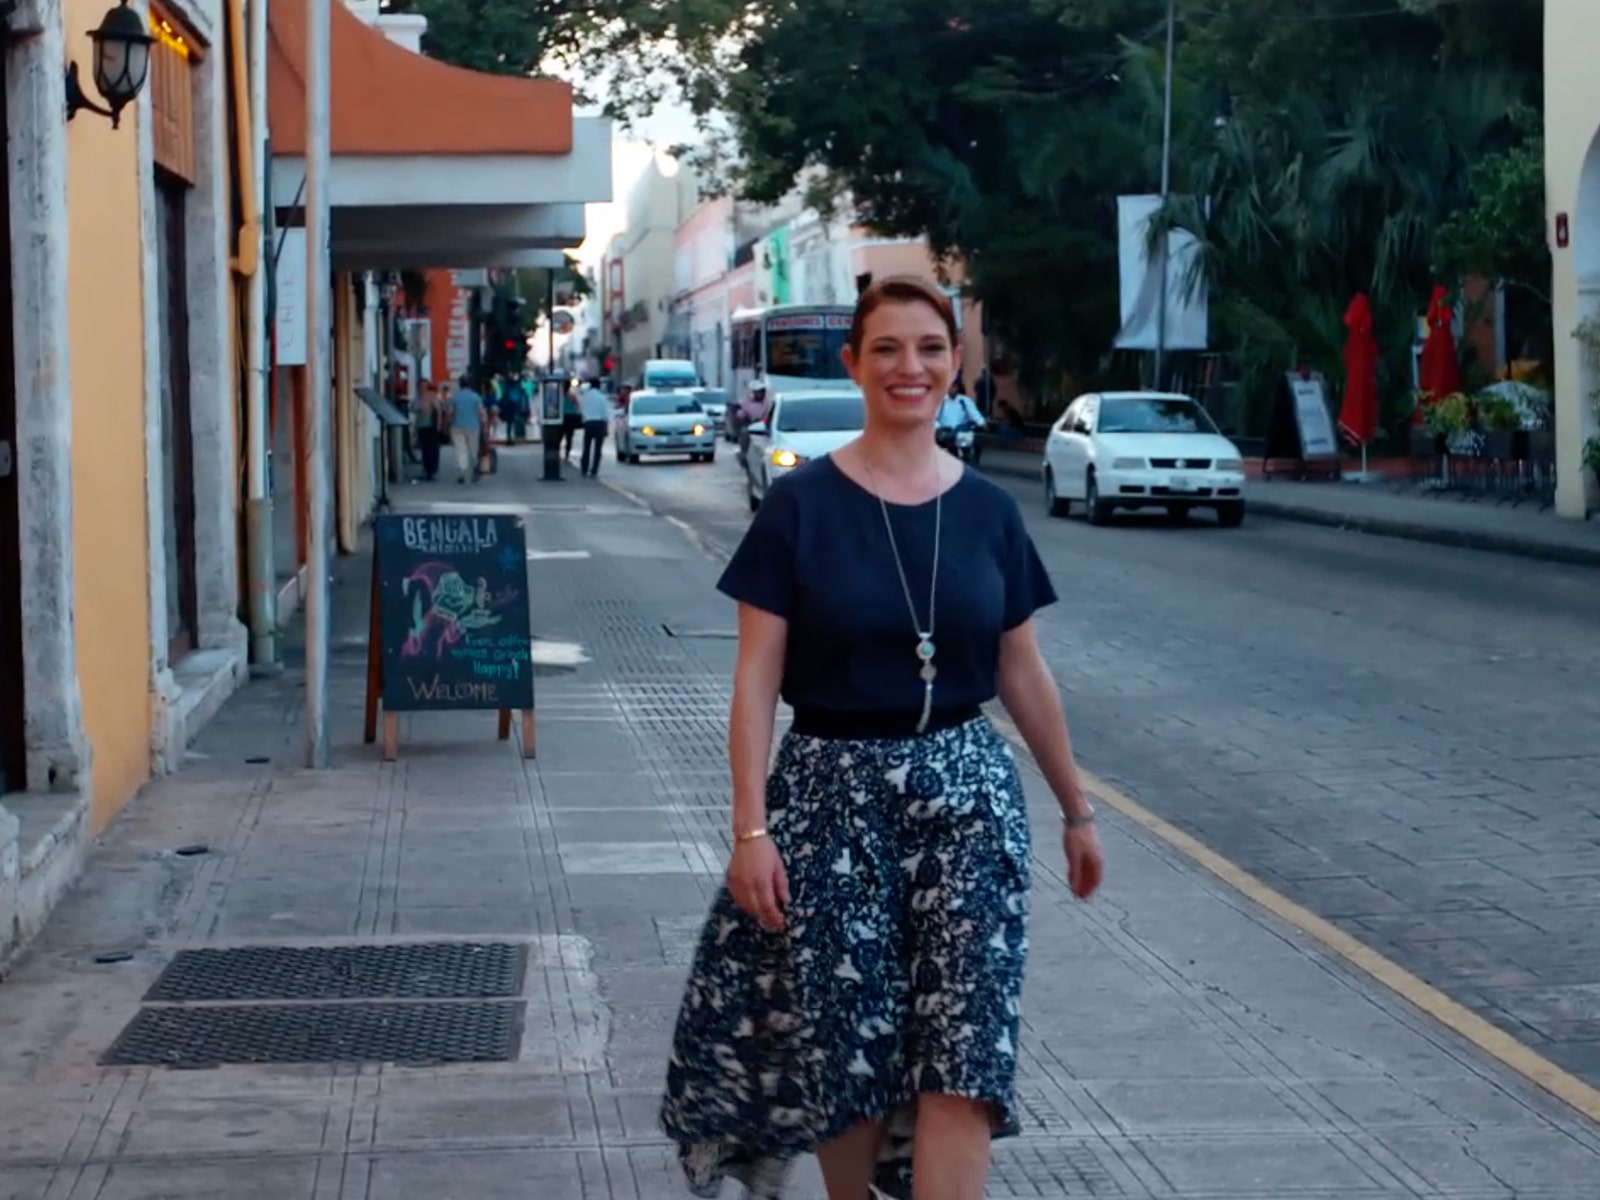 Episode 502: Mérida: Exploring with the Locals